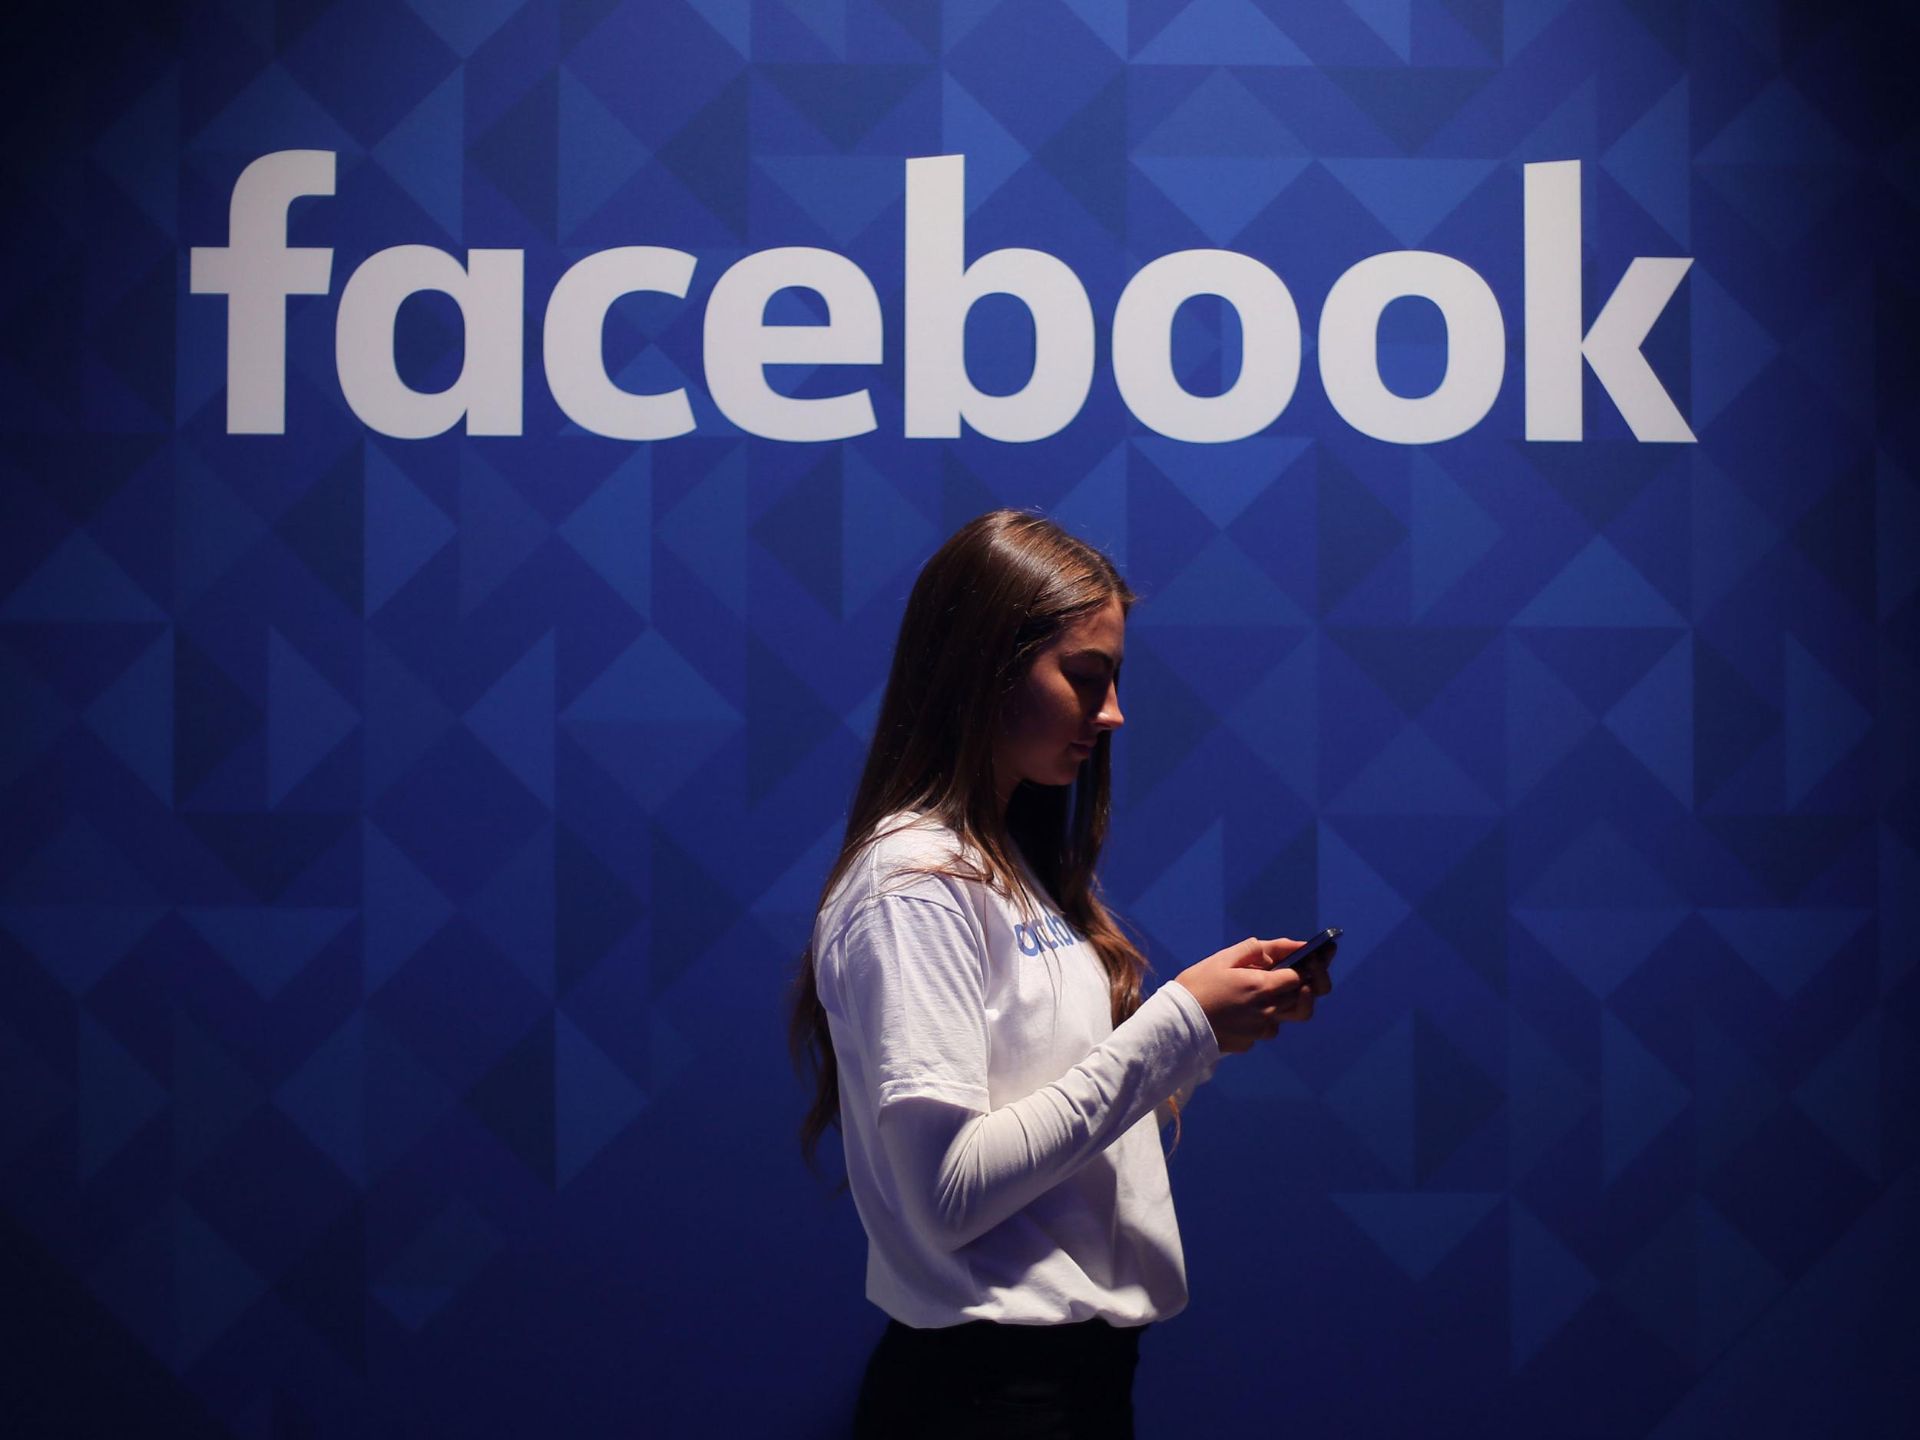 Facebook lanza ofertas a través del teléfono móvil en España